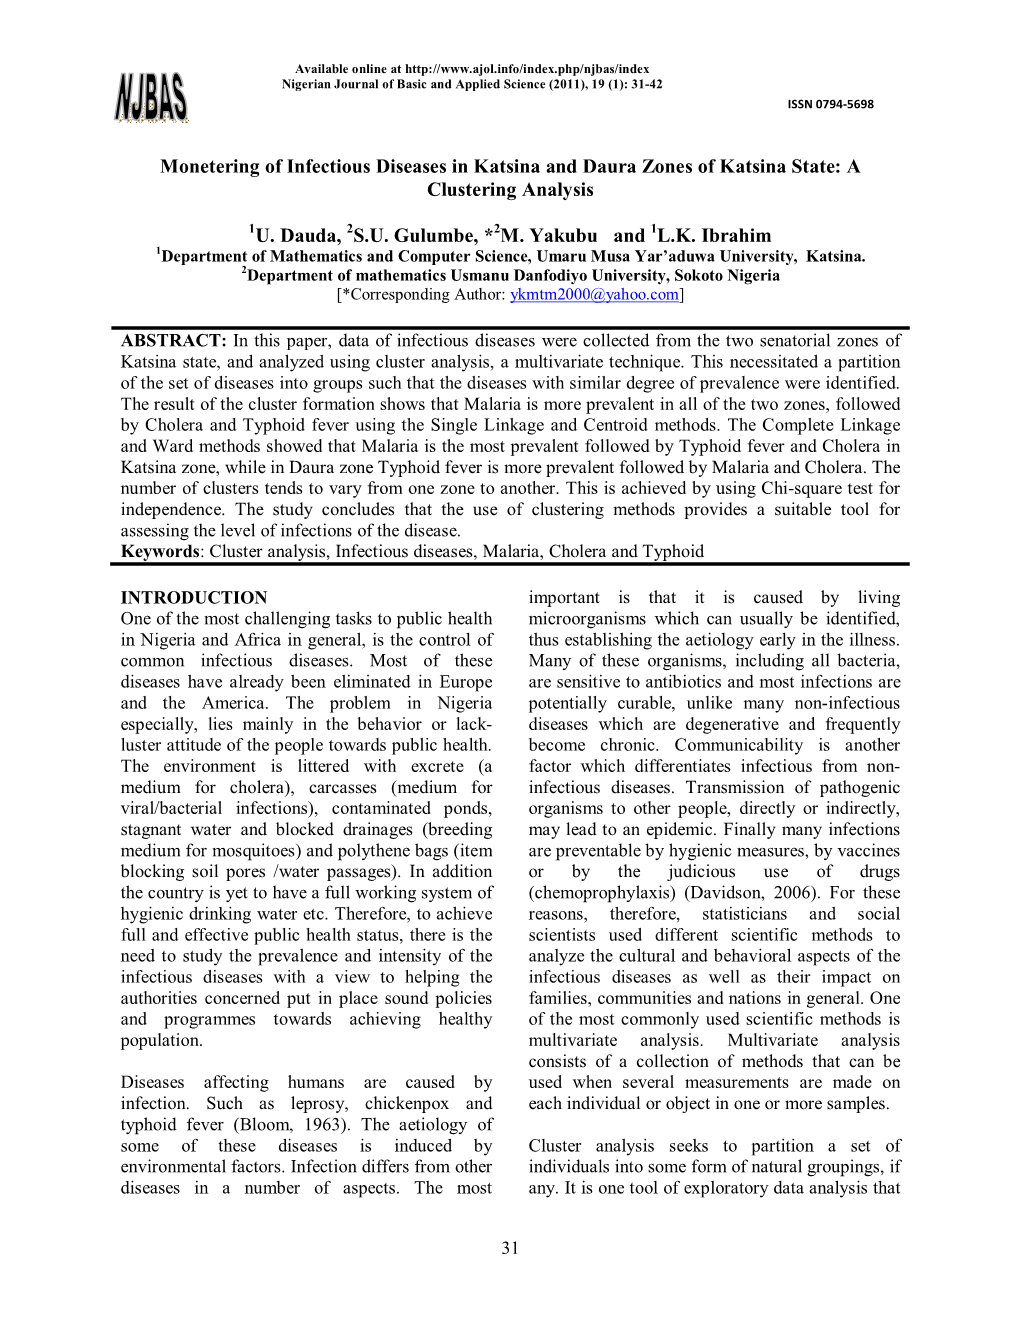 Monetering of Infectious Diseases in Katsina and Daura Zones of Katsina State: a Clustering Analysis